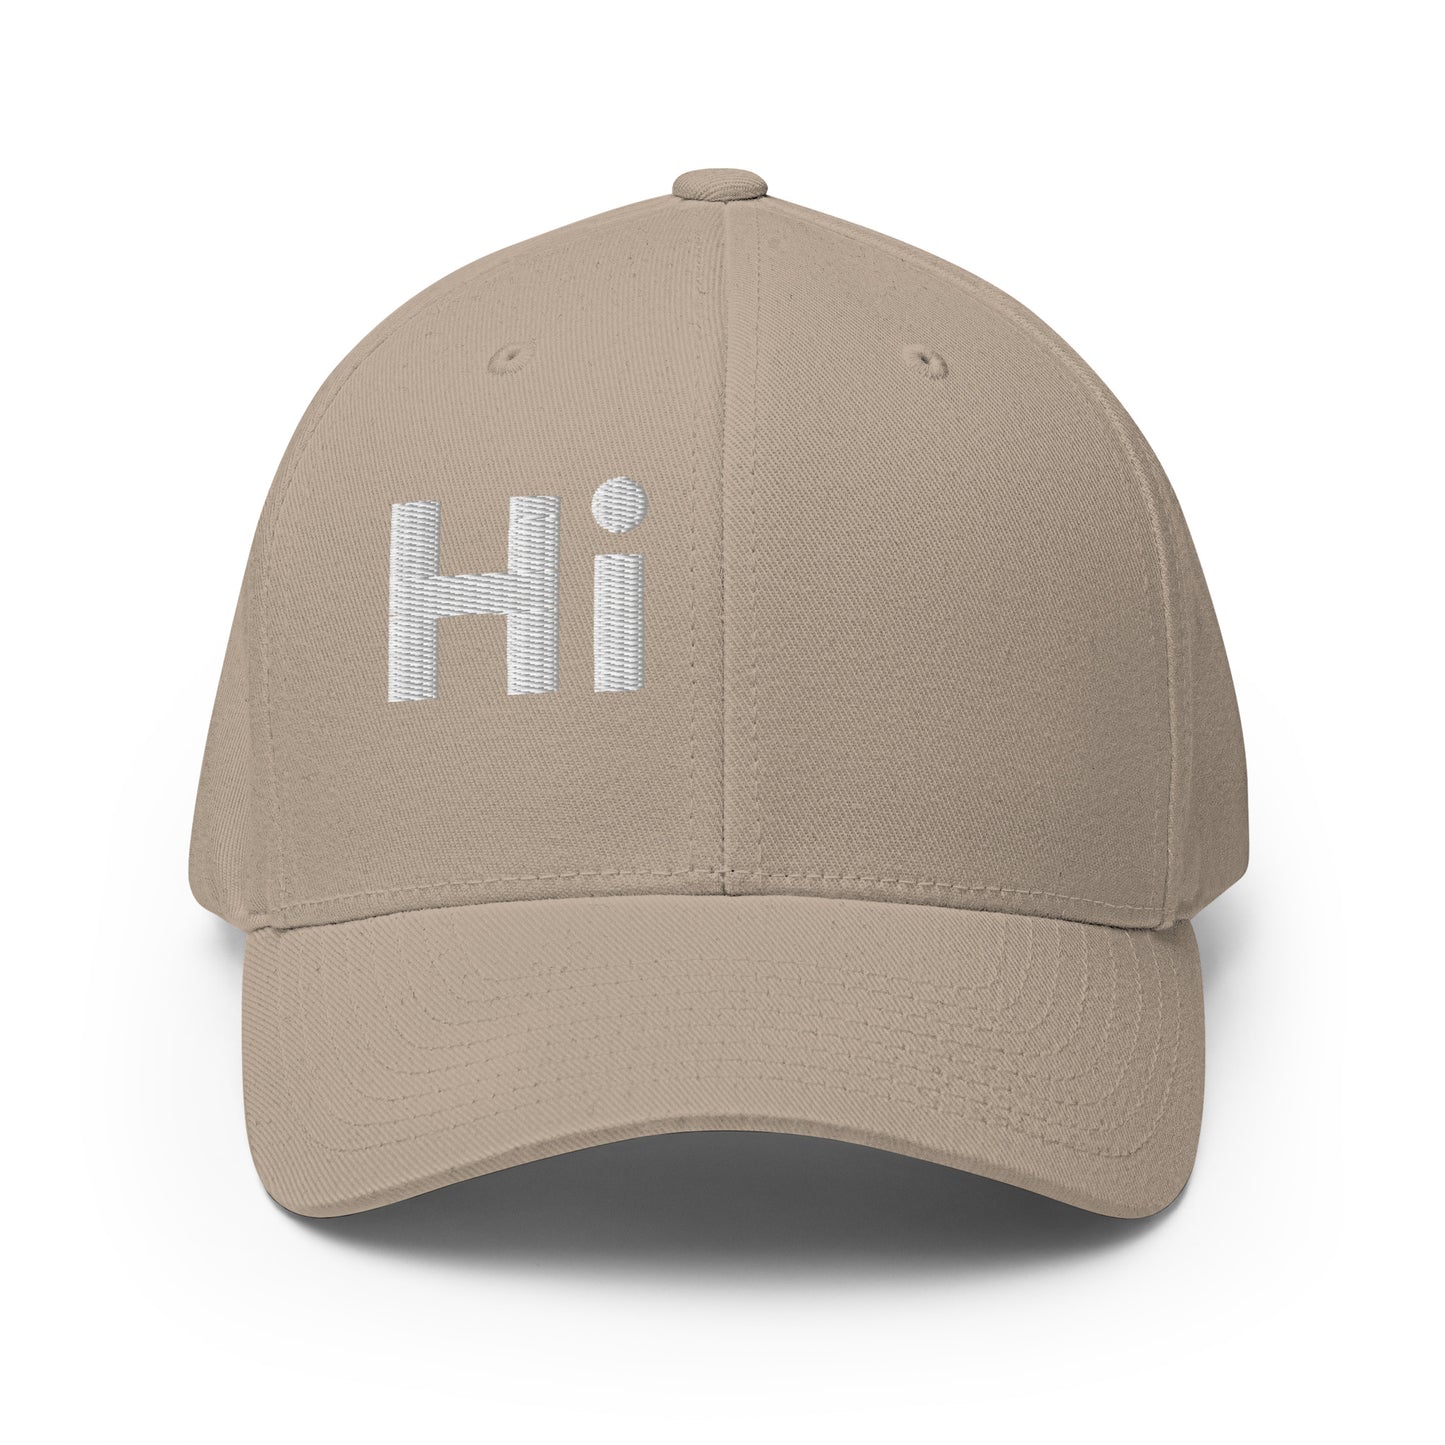 Hi Heyo Flexfit Hat